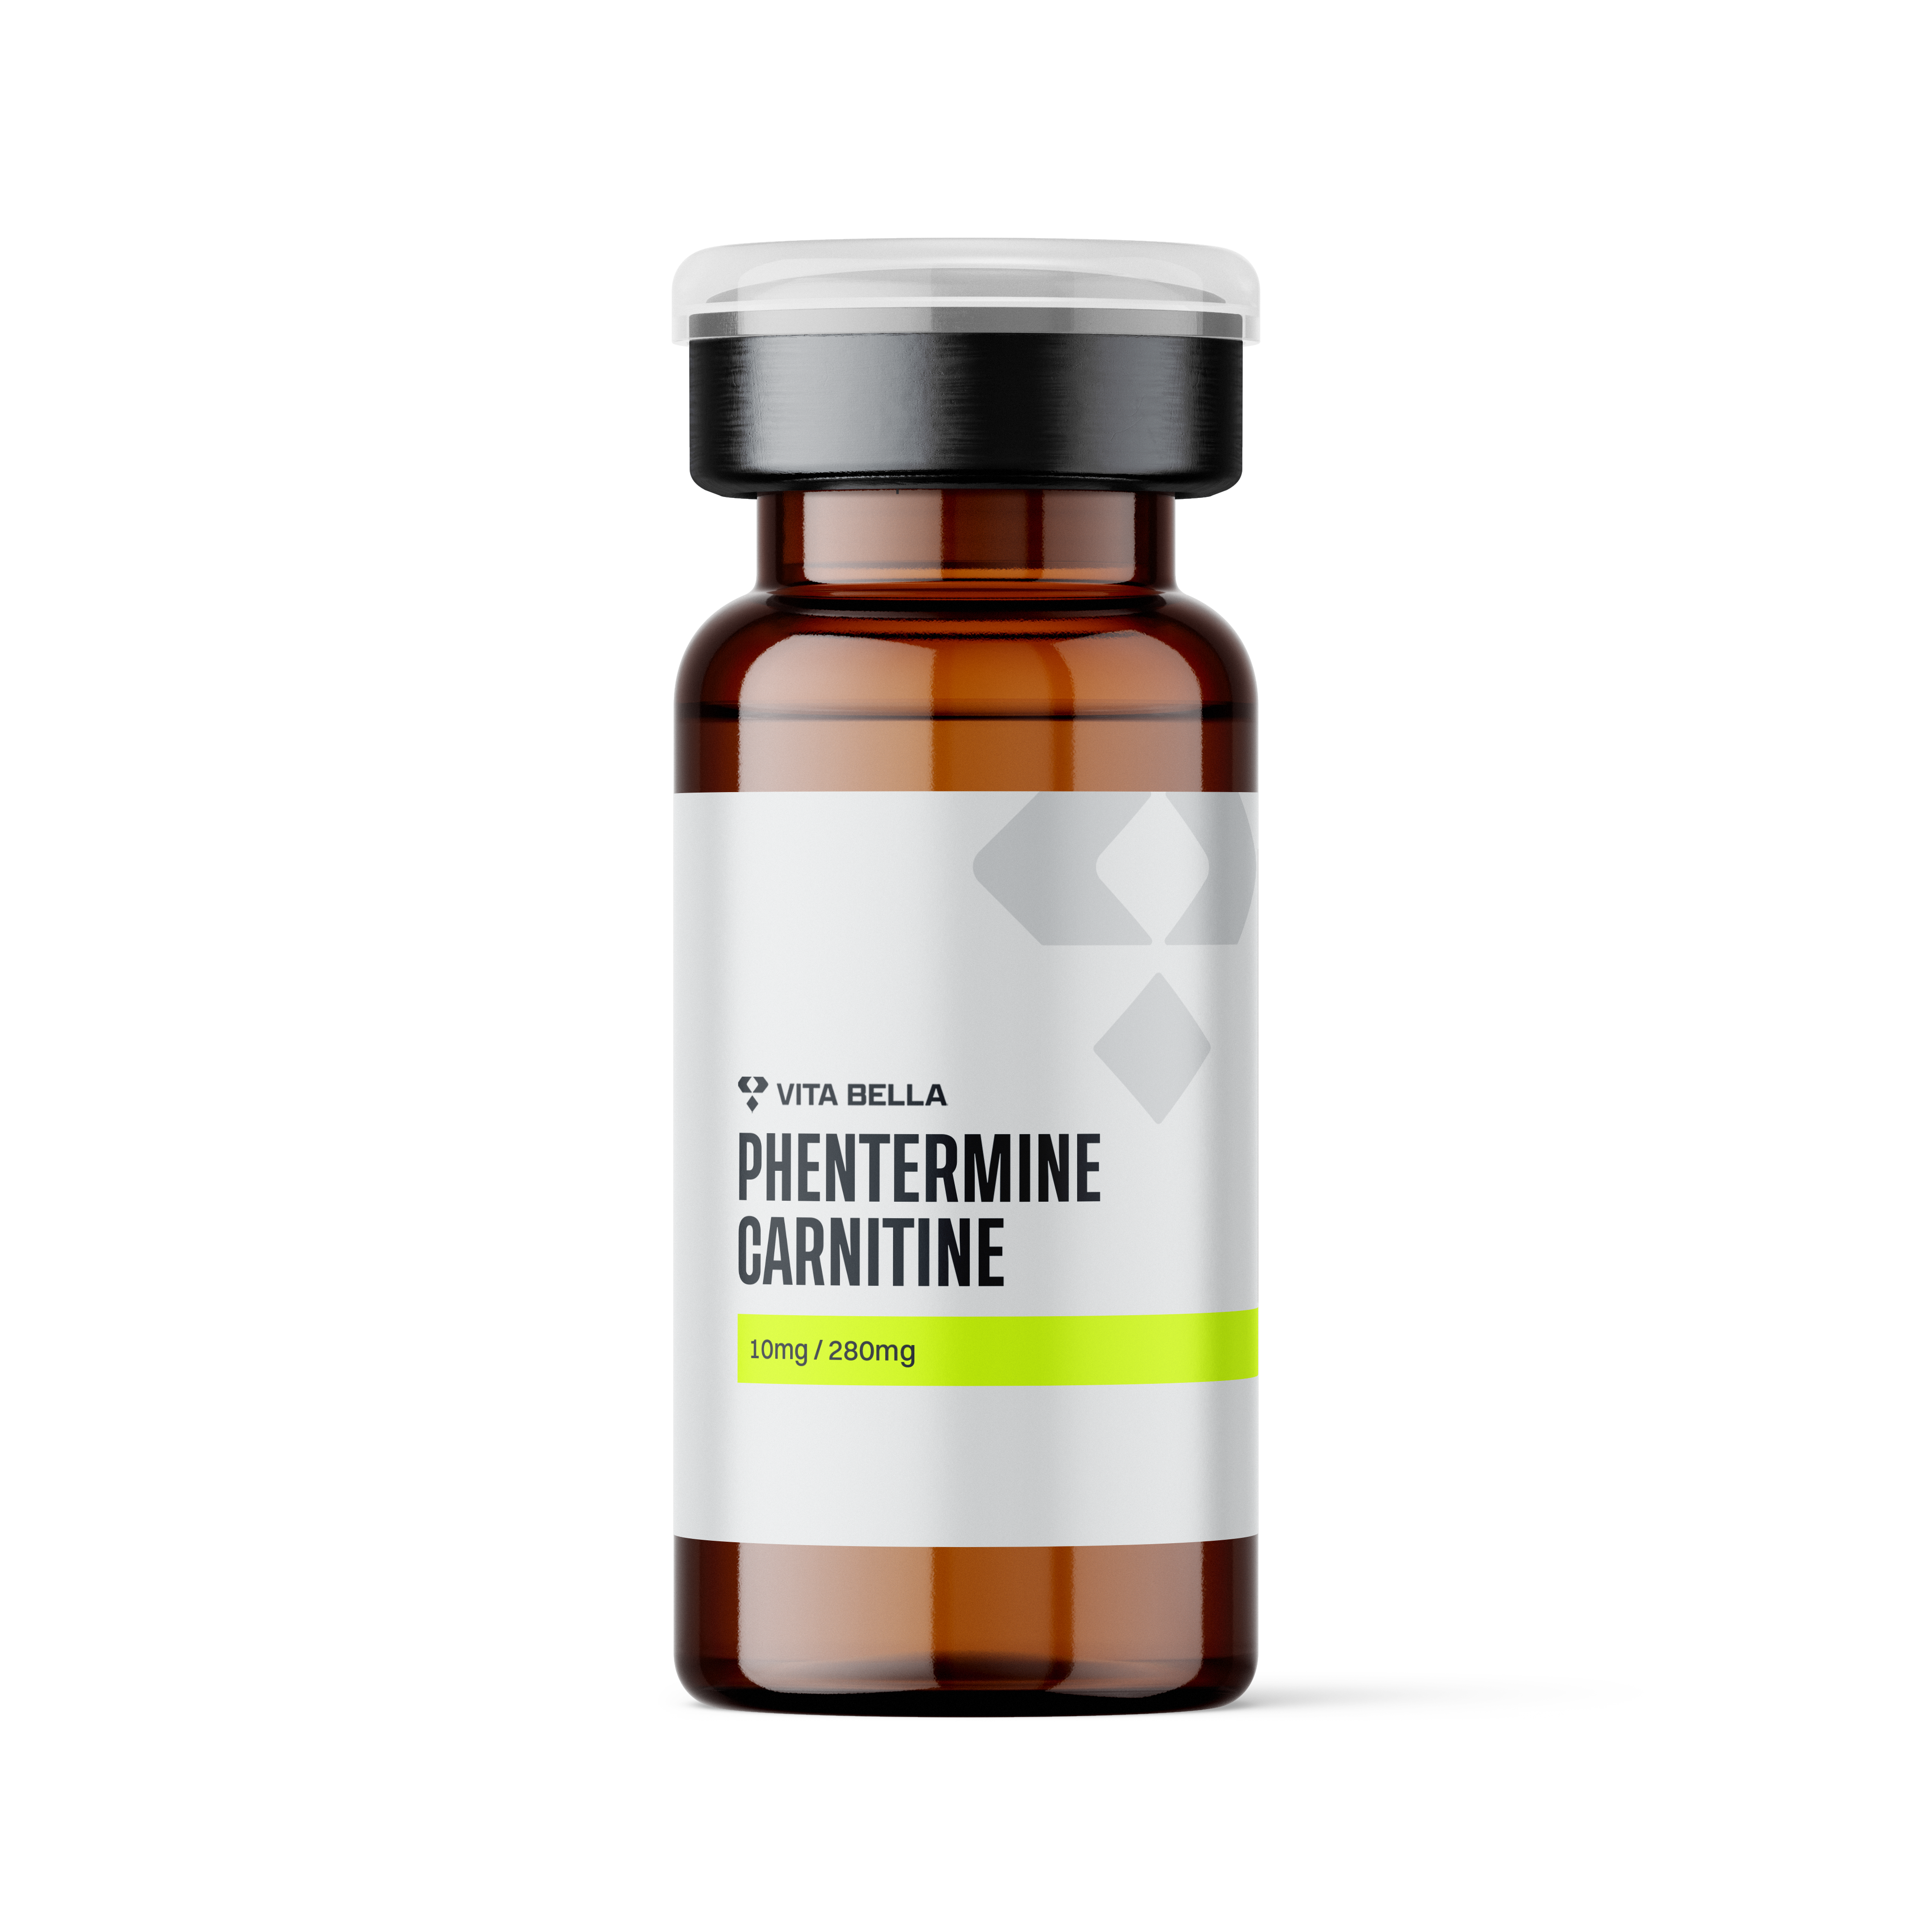 Phentermine, carnitine